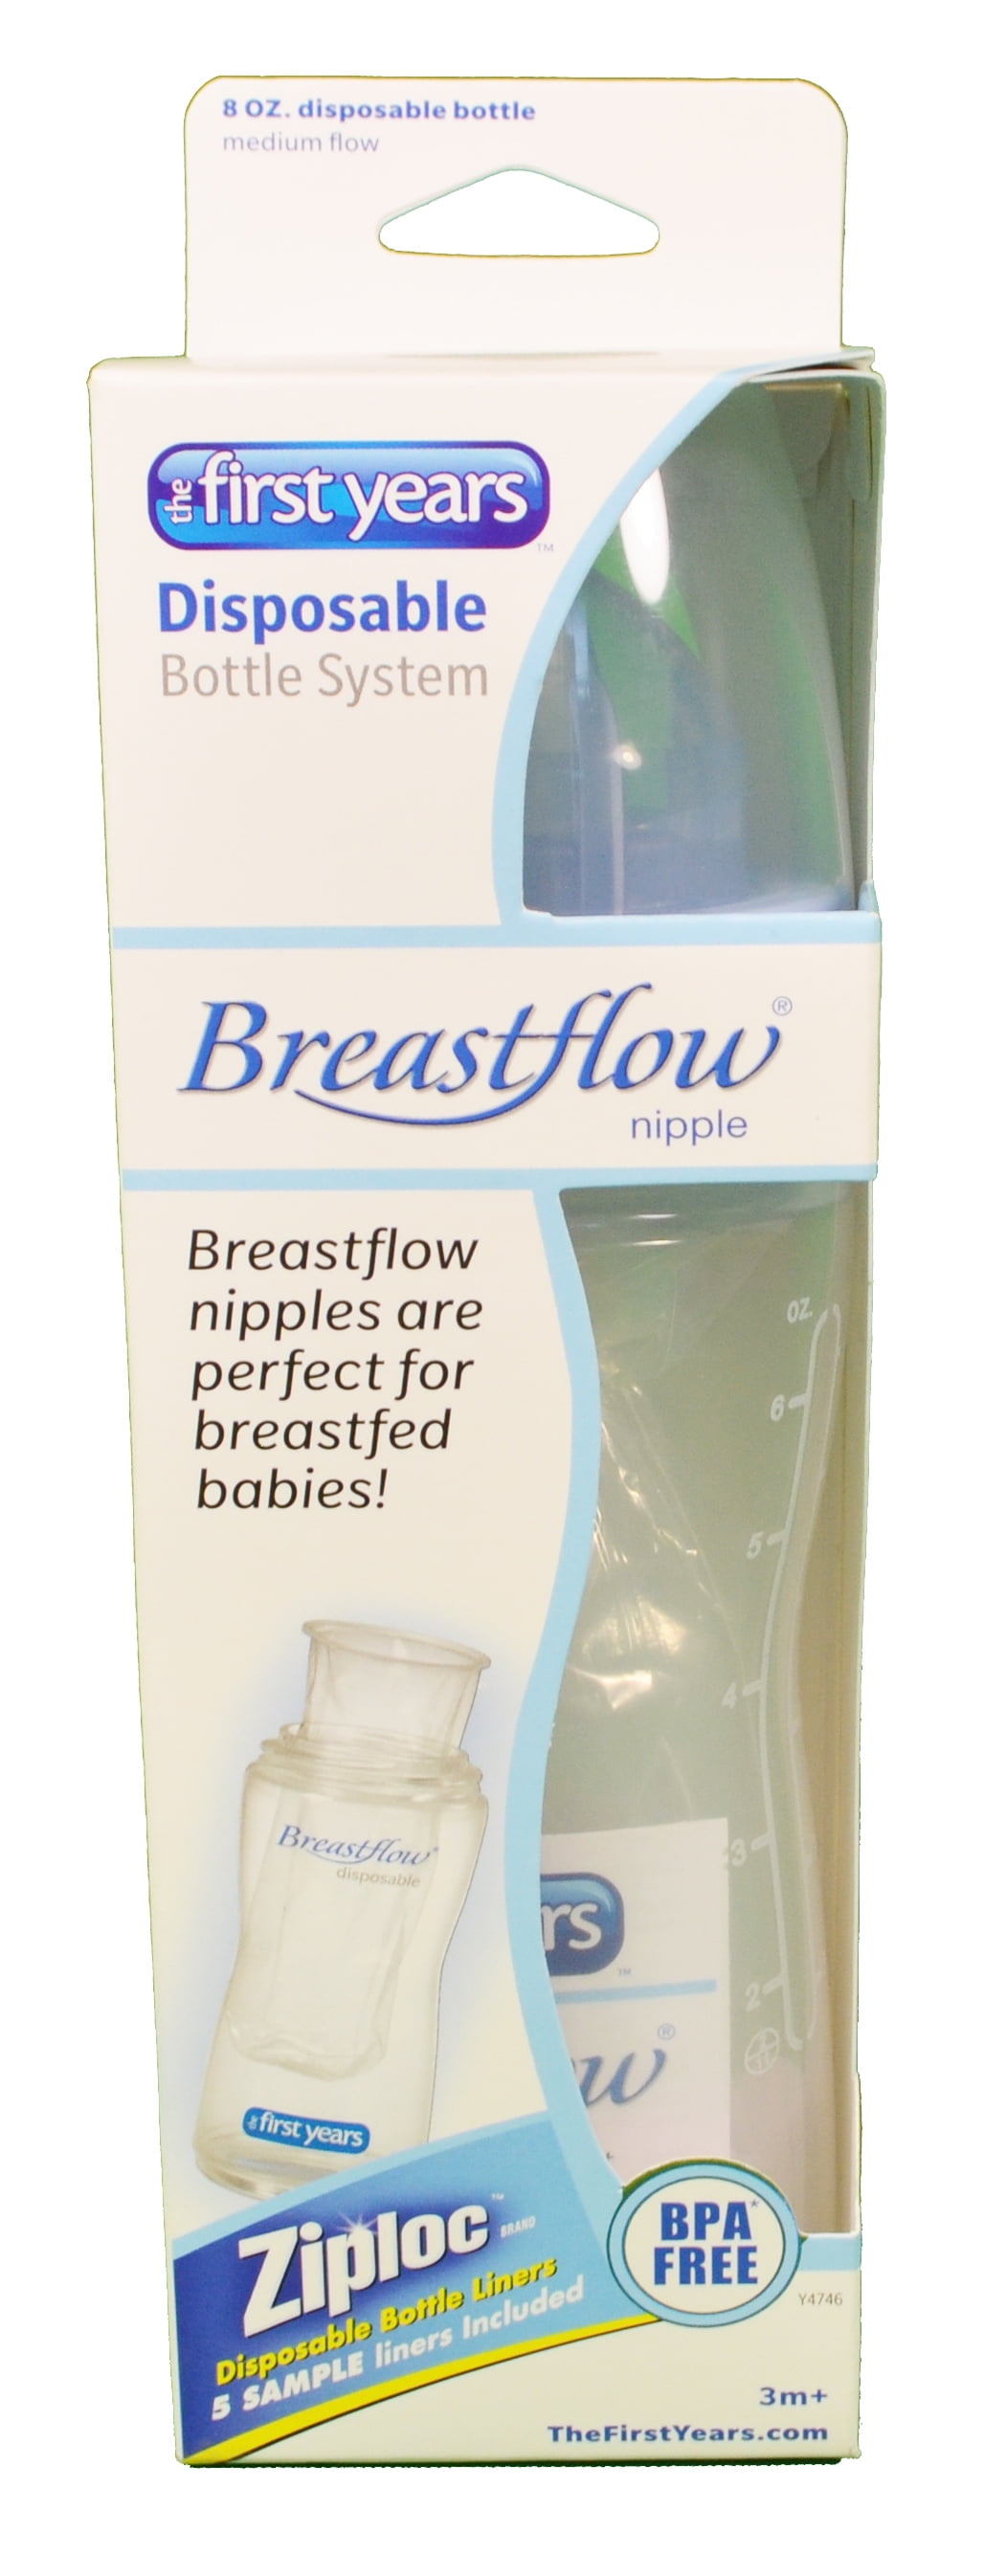 2 BOTTLES First Years Breast-Flow Disposable Baby Bottle Nurser 8 Ounce Ziploc 